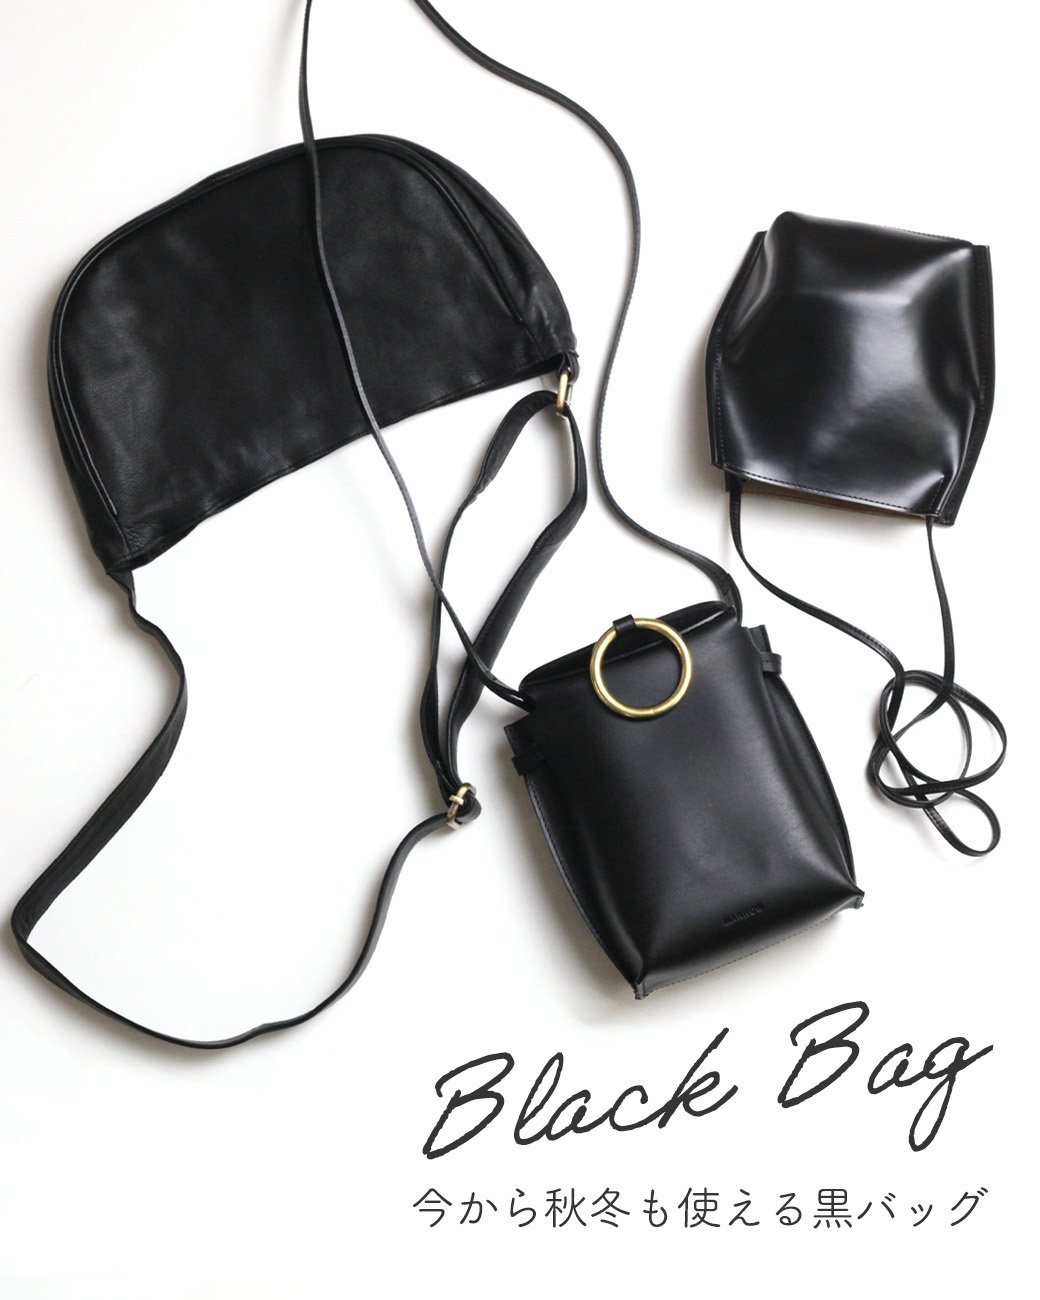 blackbag